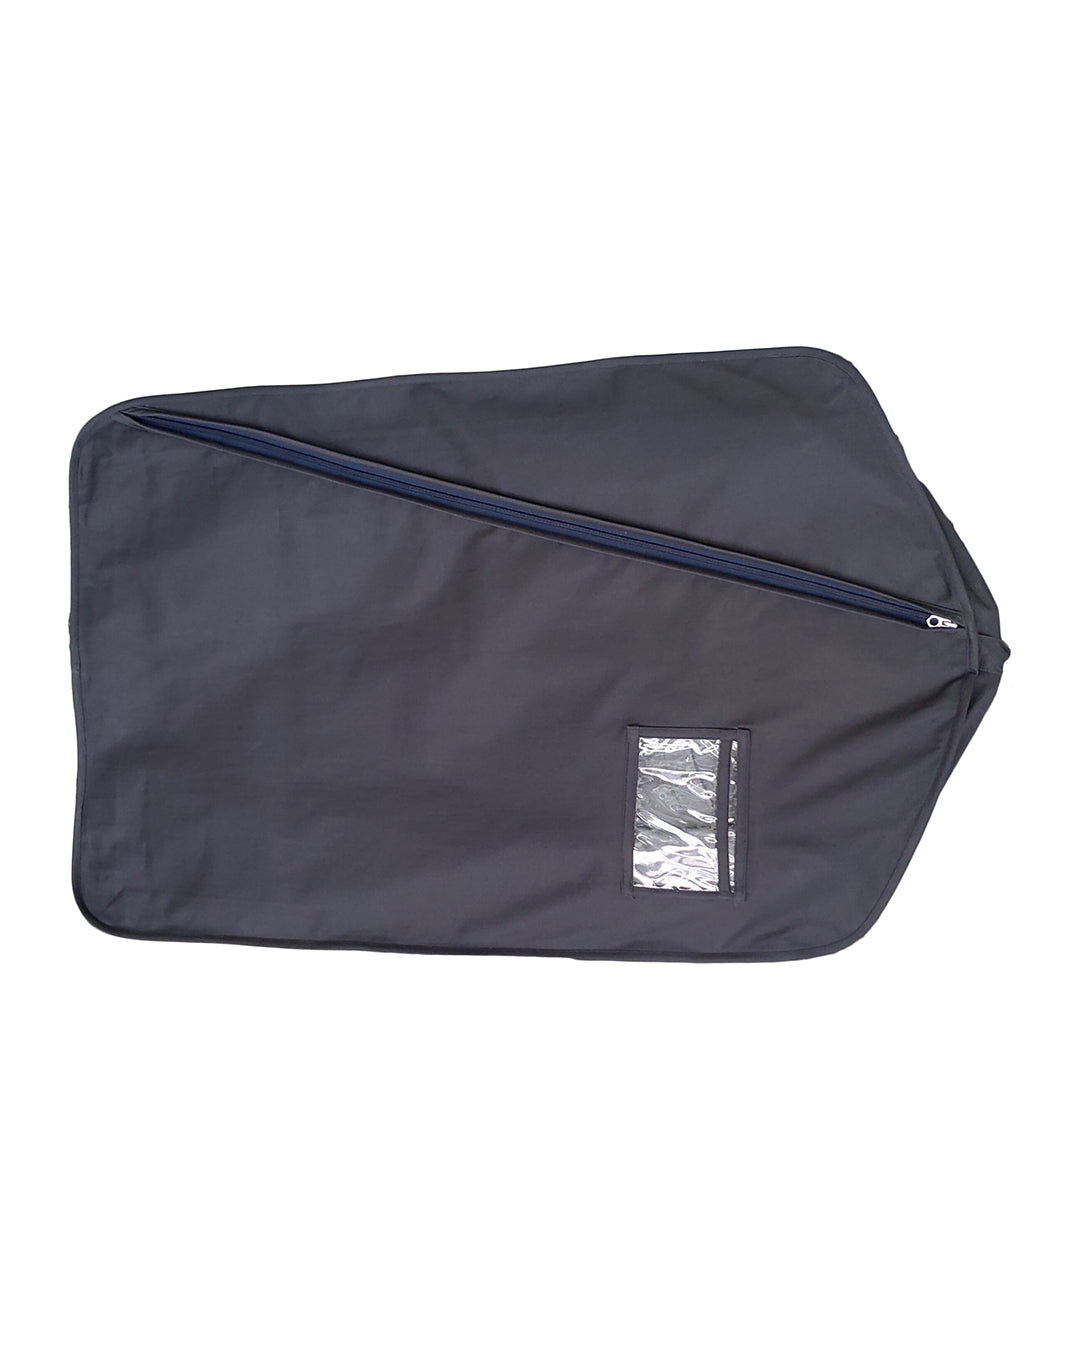 Garment Bag- Charcoal Grey